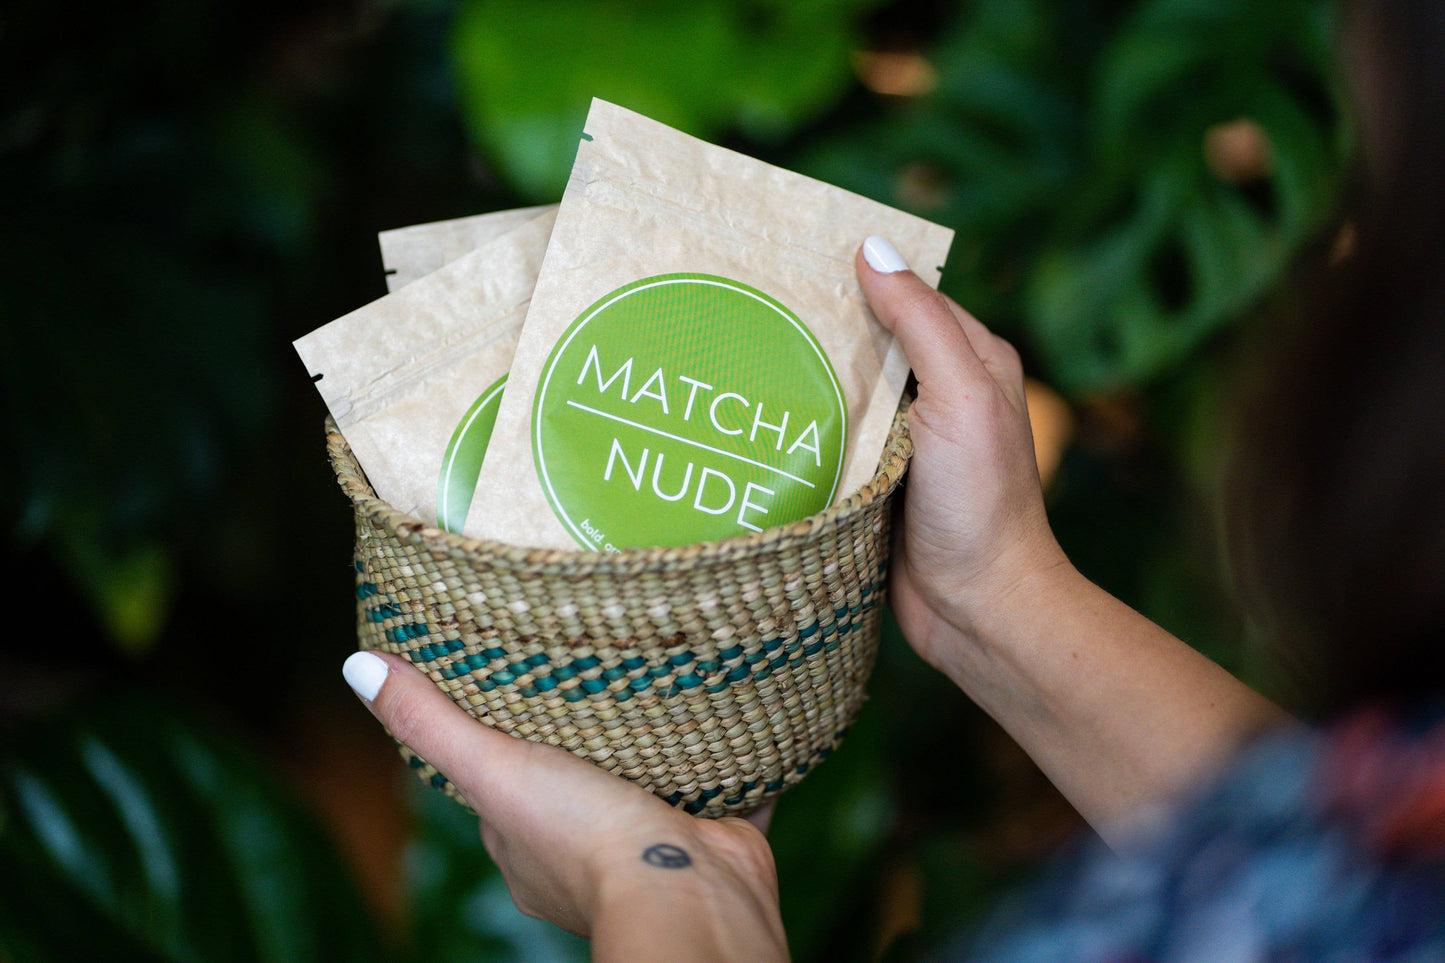 Matcha Nude - Premium Grade Organic Matcha for Resale